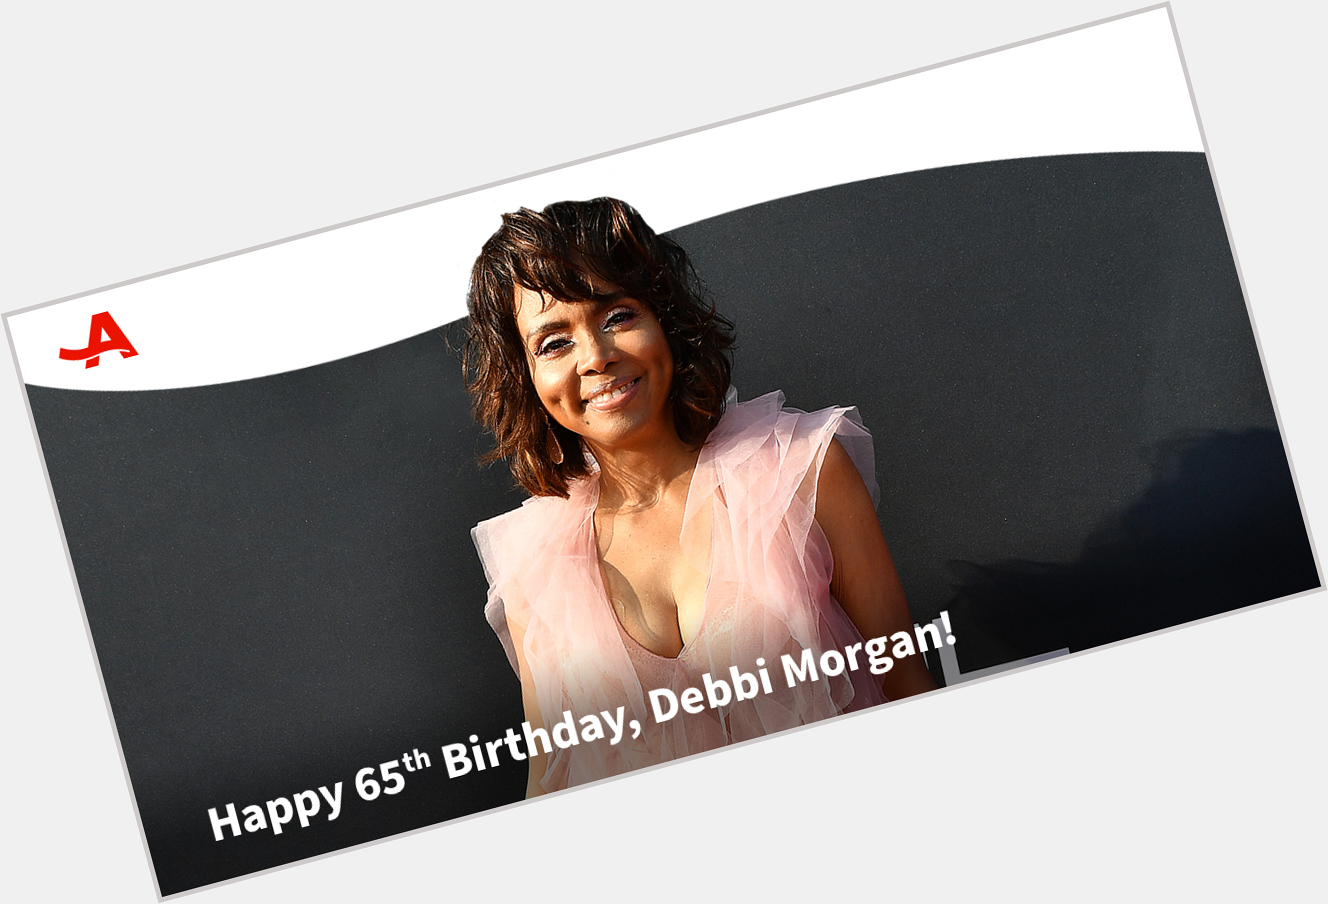 Actress Debbi Morgan is celebrating 65 years today. Happy 65th birthday! 